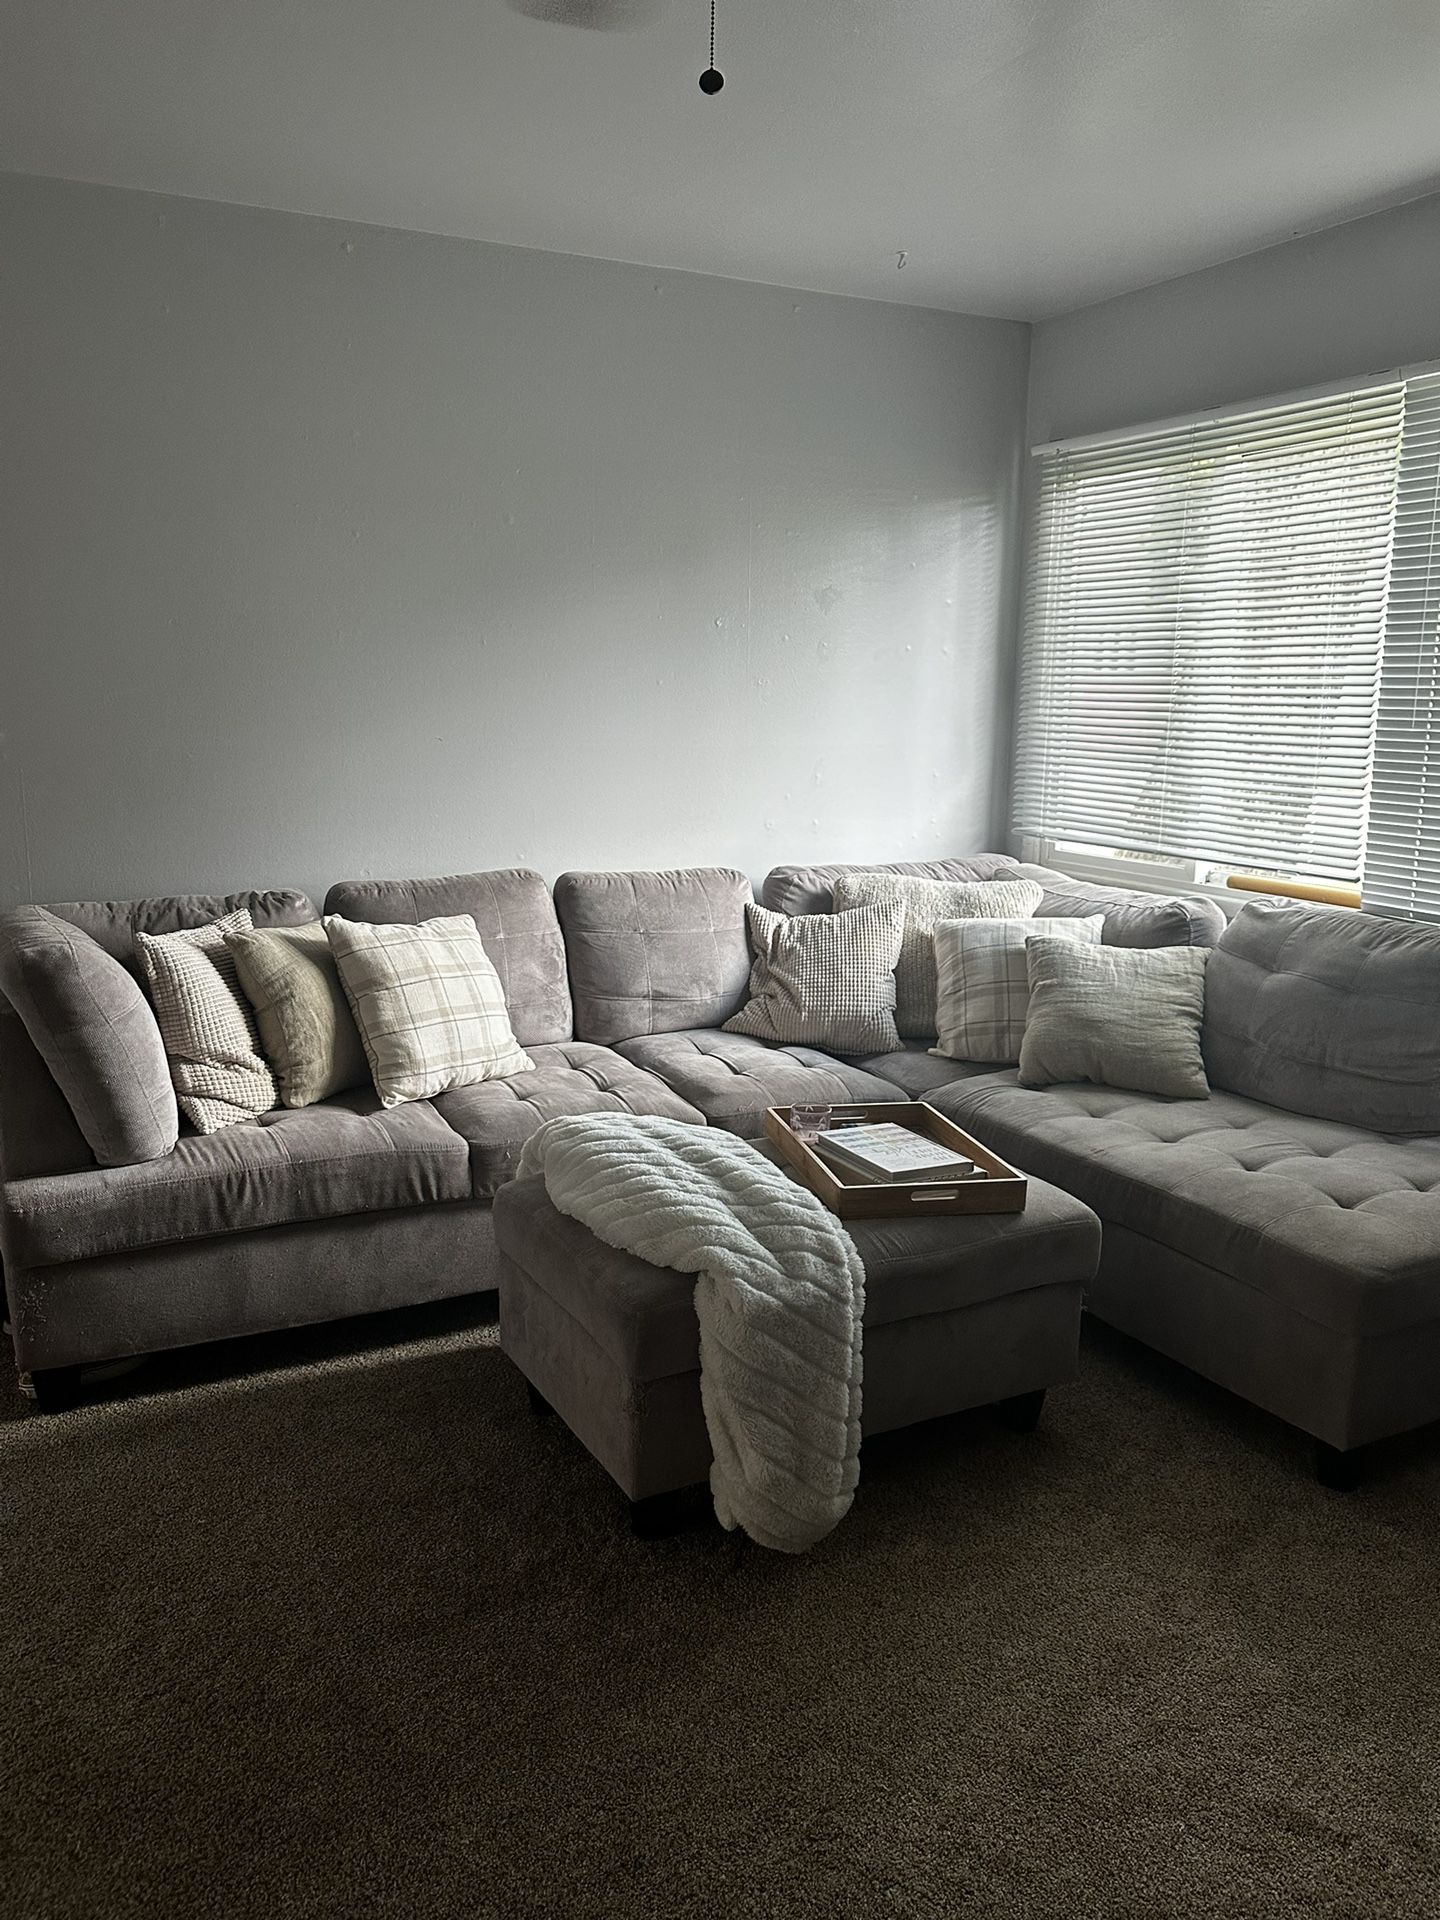 Super Cute Grey Couch 9x7 Feet